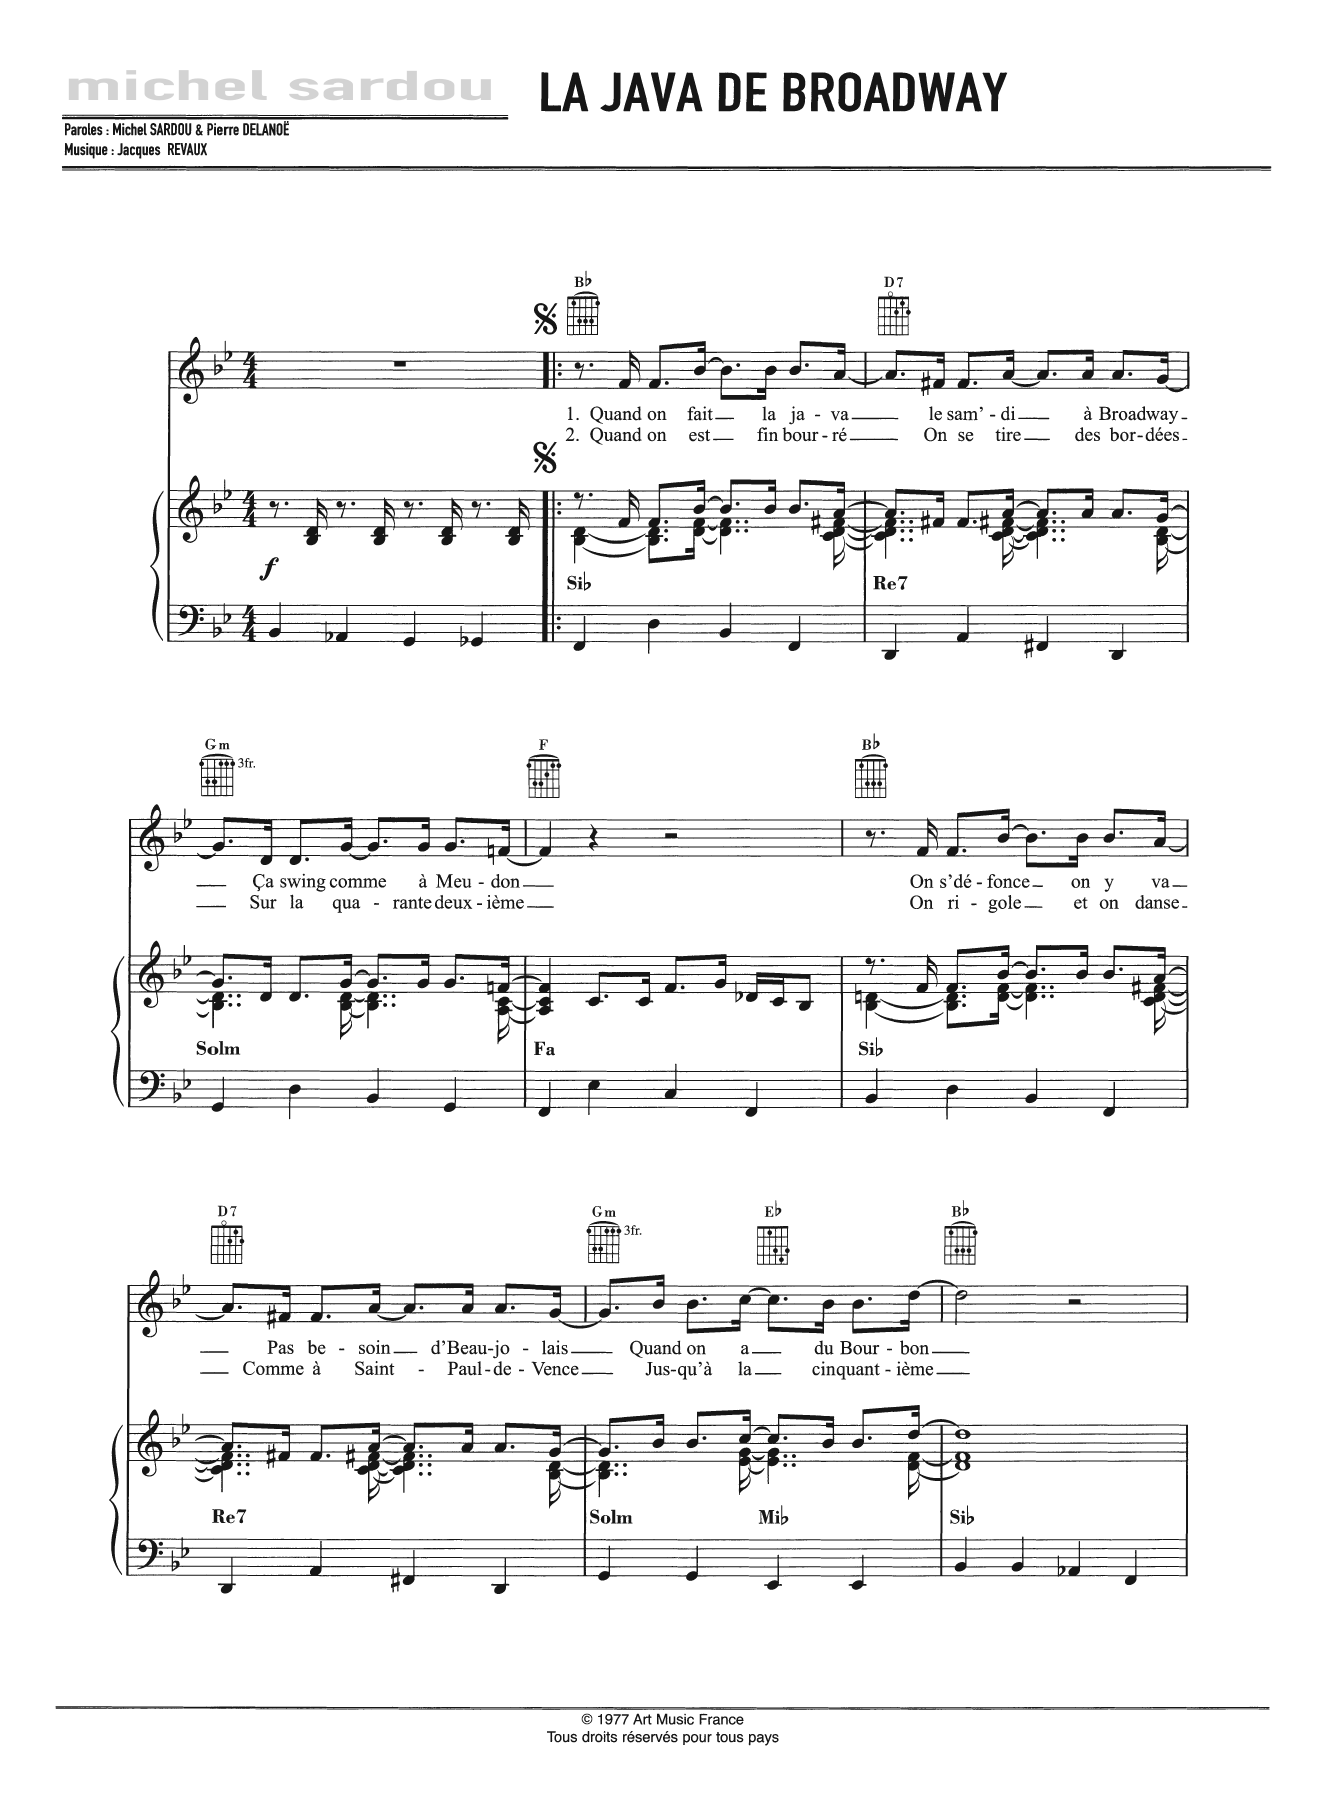 Michel Sardou La Java De Broadway Sheet Music Notes & Chords for Piano, Vocal & Guitar - Download or Print PDF